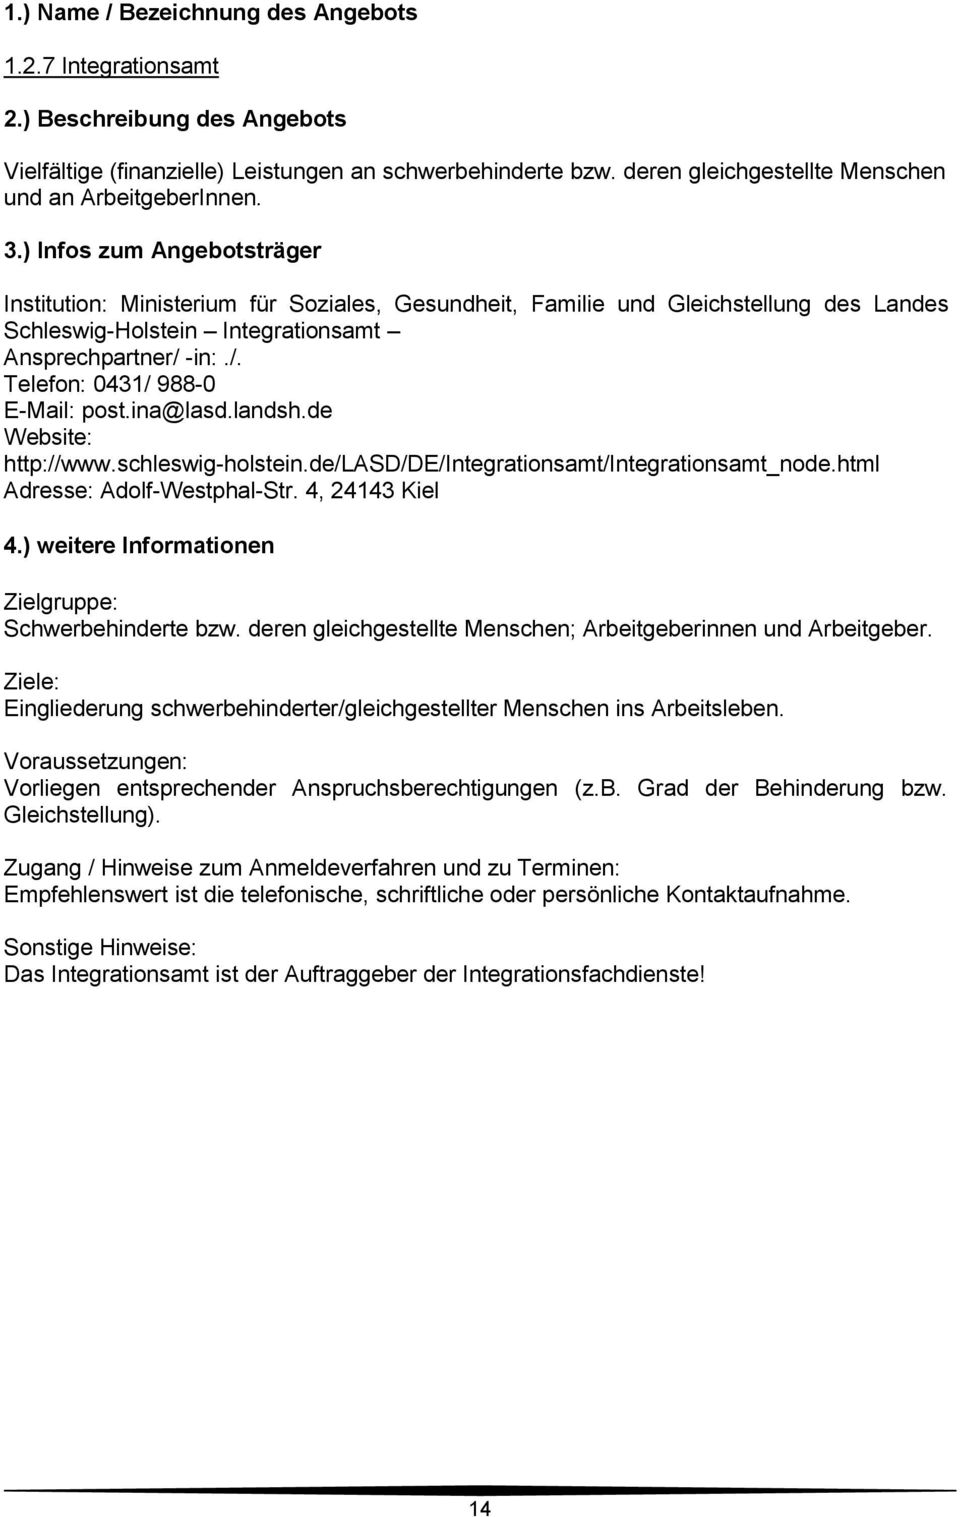 -in:./. Telefon: 0431/ 988-0 E-Mail: post.ina@lasd.landsh.de Website: http://www.schleswig-holstein.de/lasd/de/integrationsamt/integrationsamt_node.html Adresse: Adolf-Westphal-Str.